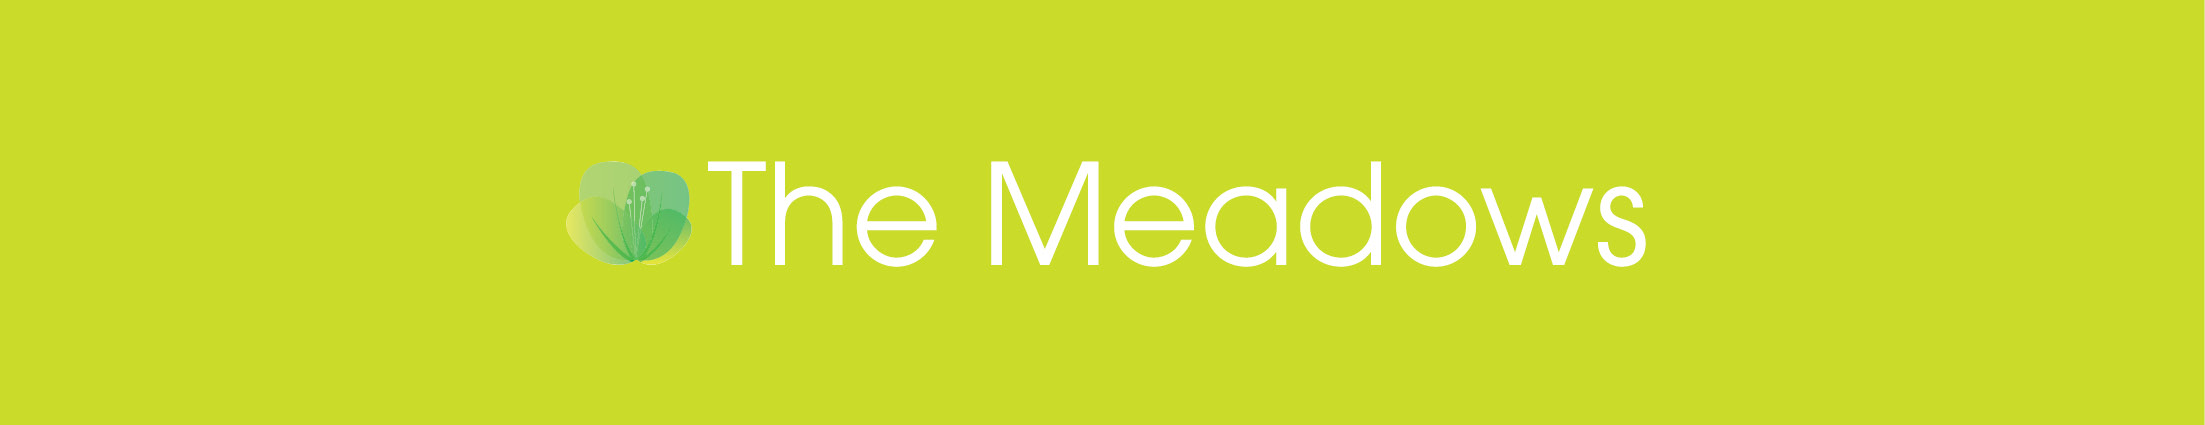 The Meadows Branding Package